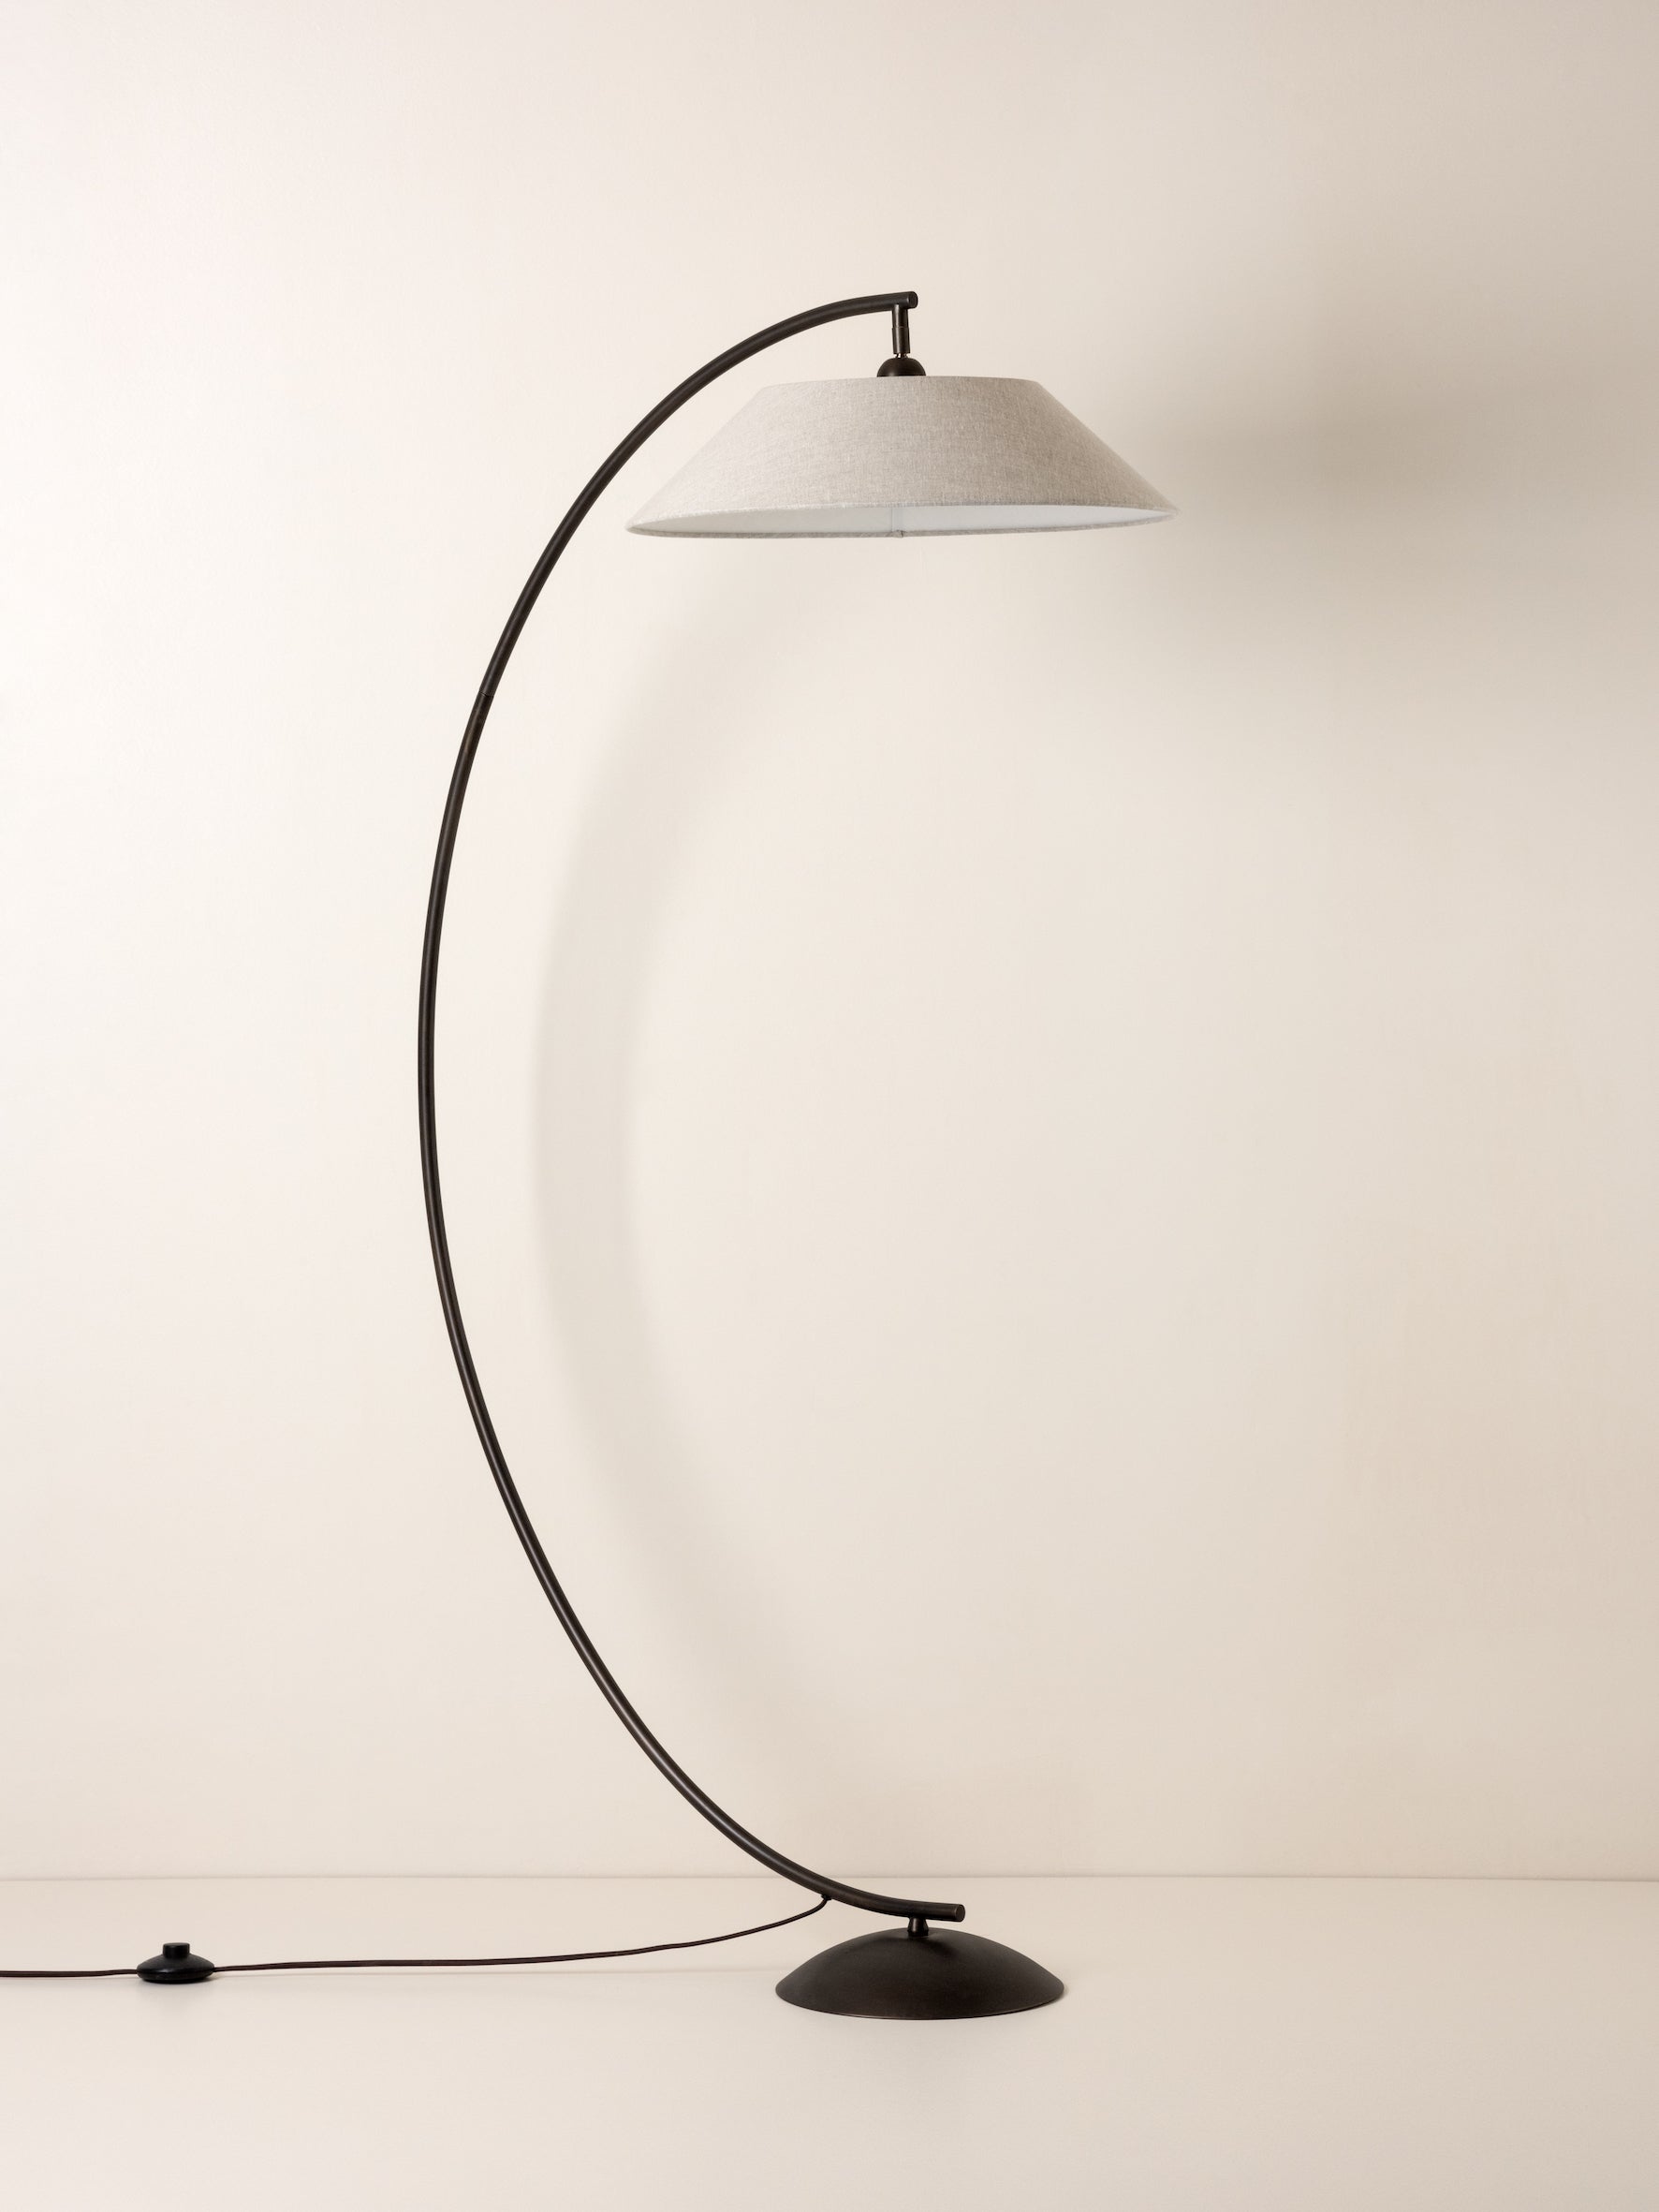 Circo - arc bronze and linen floor lamp | Floor Lamp | Lights & Lamps | UK | Modern Affordable Designer Lighting